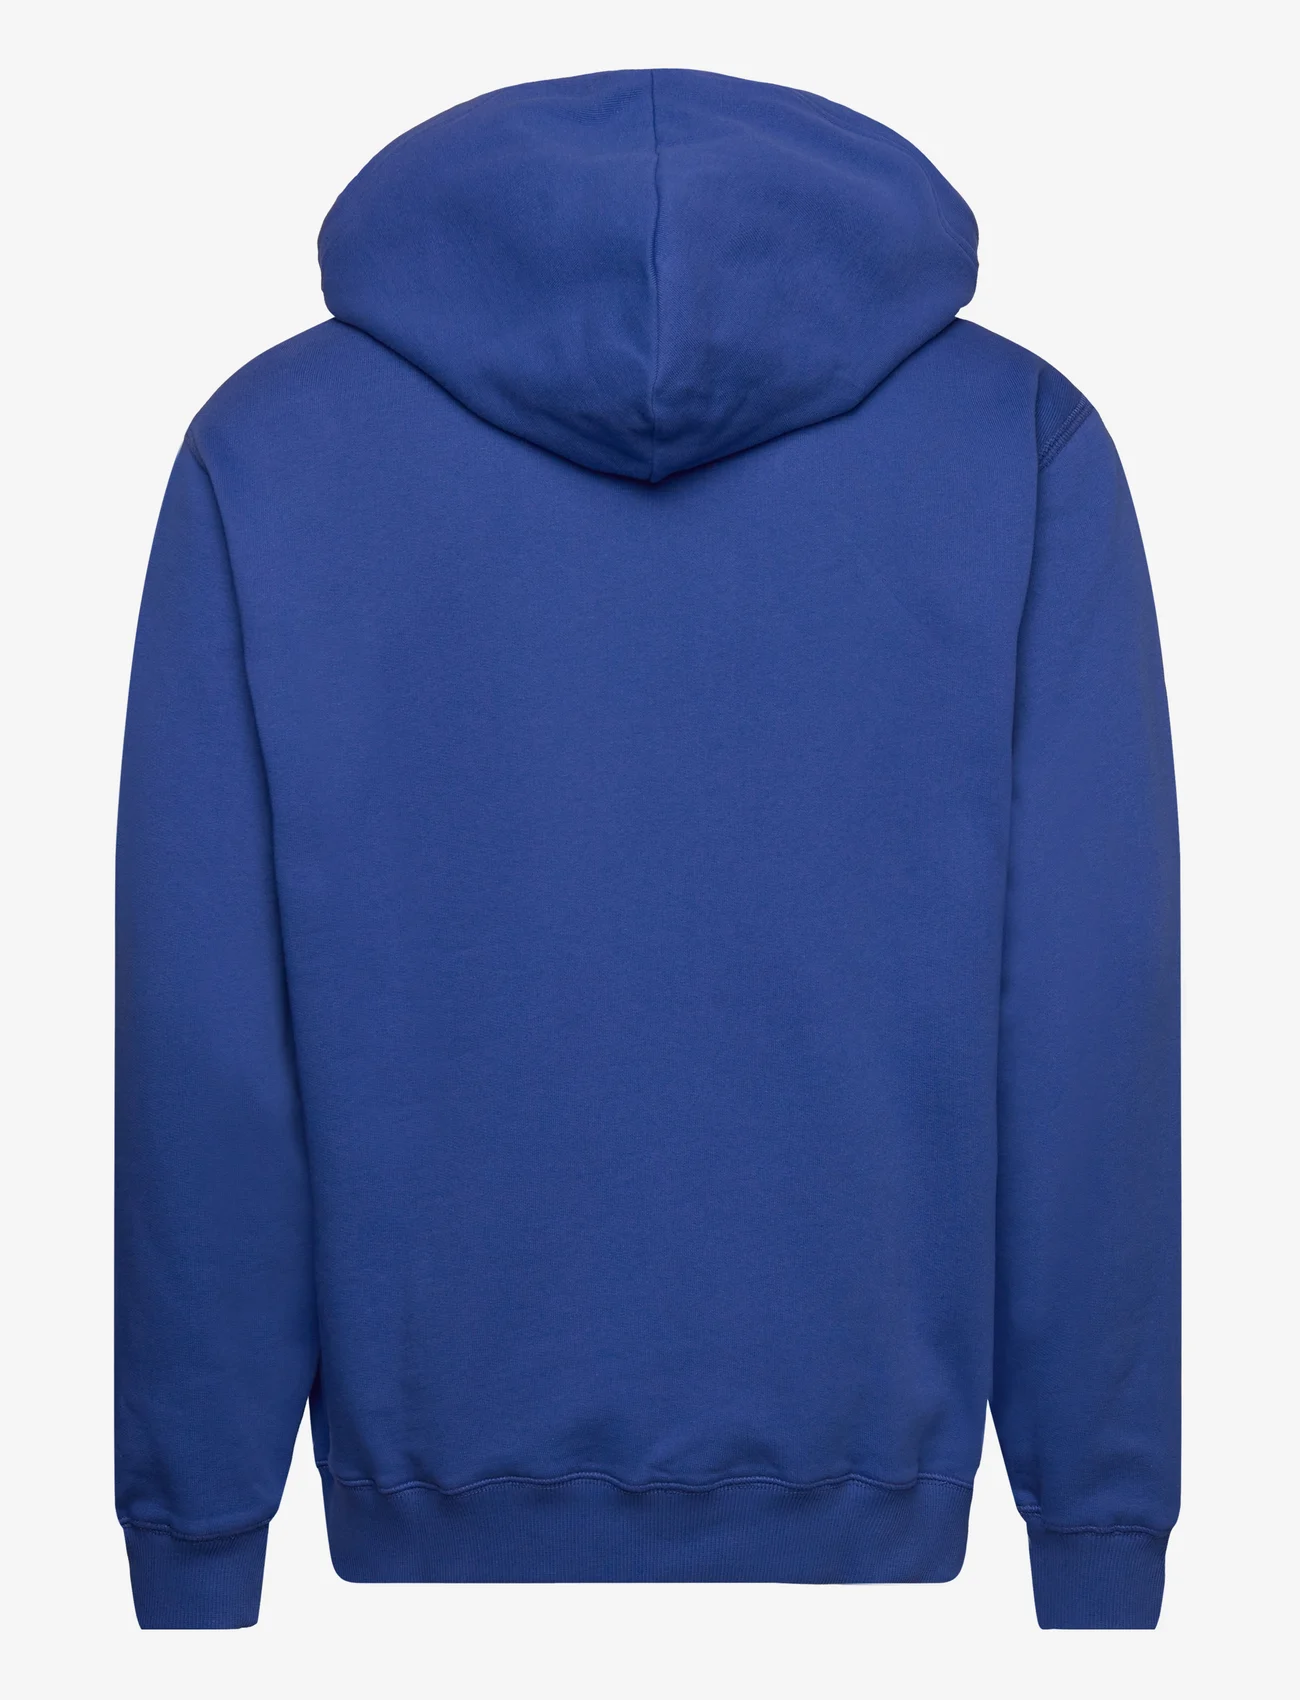 Makia - Hel Hooded Sweatshirt - svetarit - blue - 1